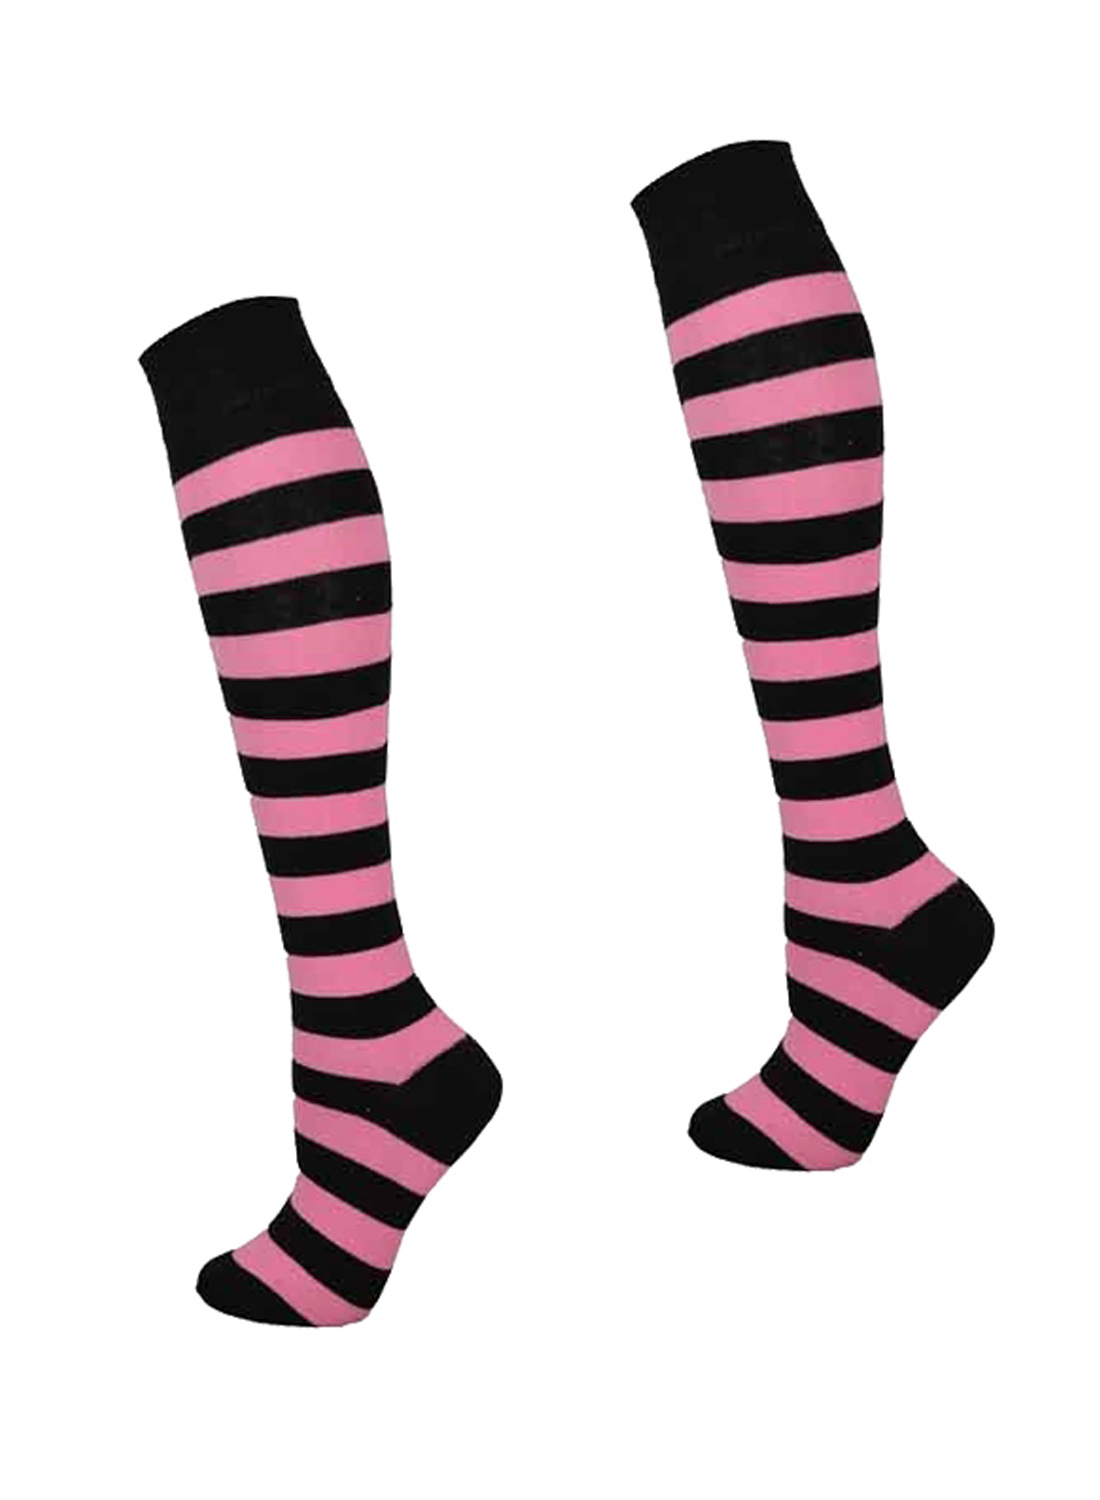 KH Socks Black Pink Stripes